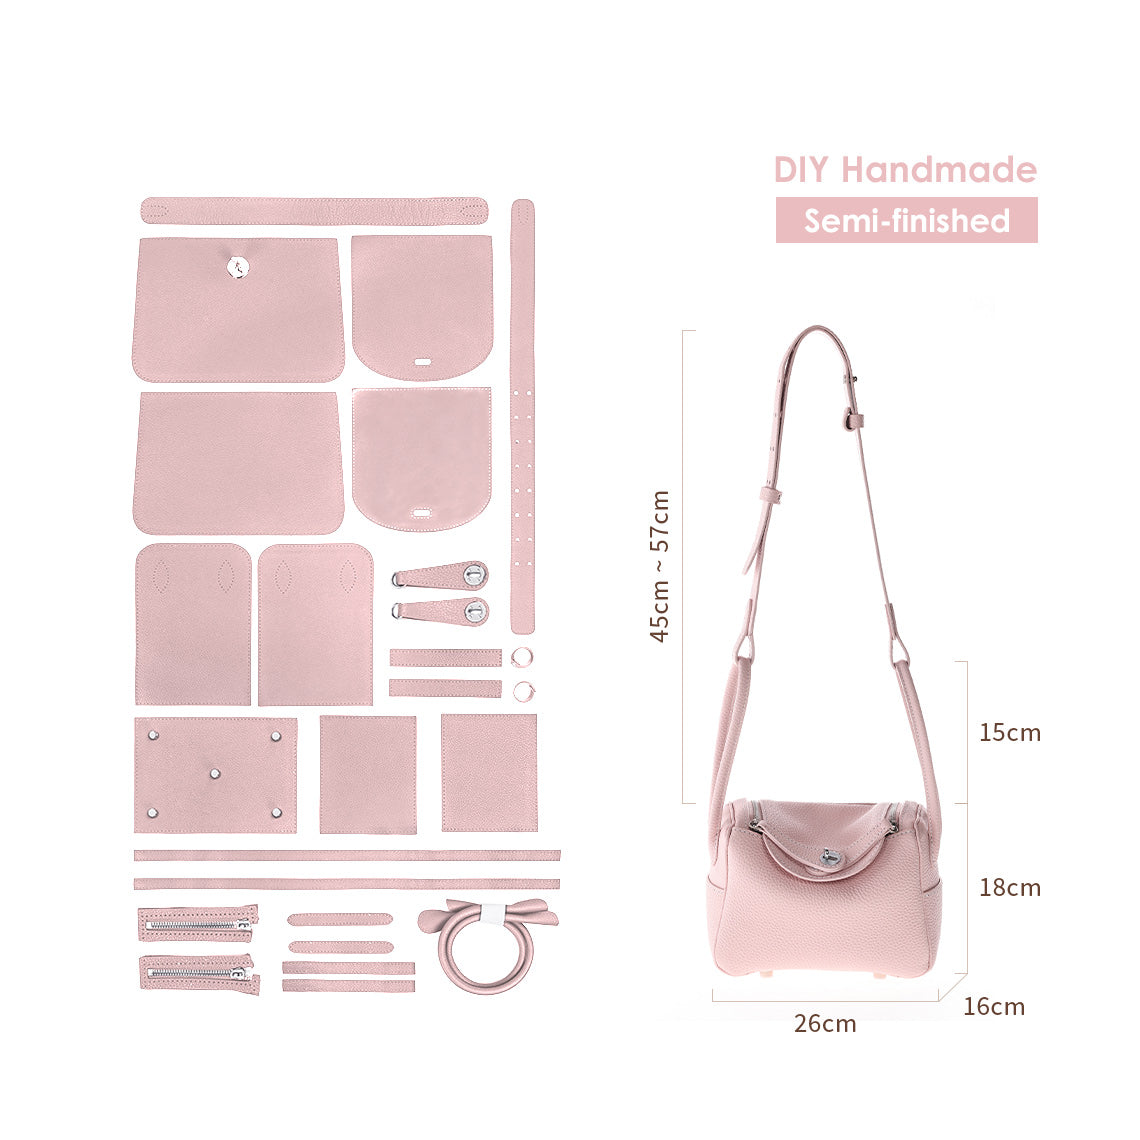 Top Grain Leather Fashion Lindi Handbag DIY Kit | Extra 20% Price Drop at Checkout